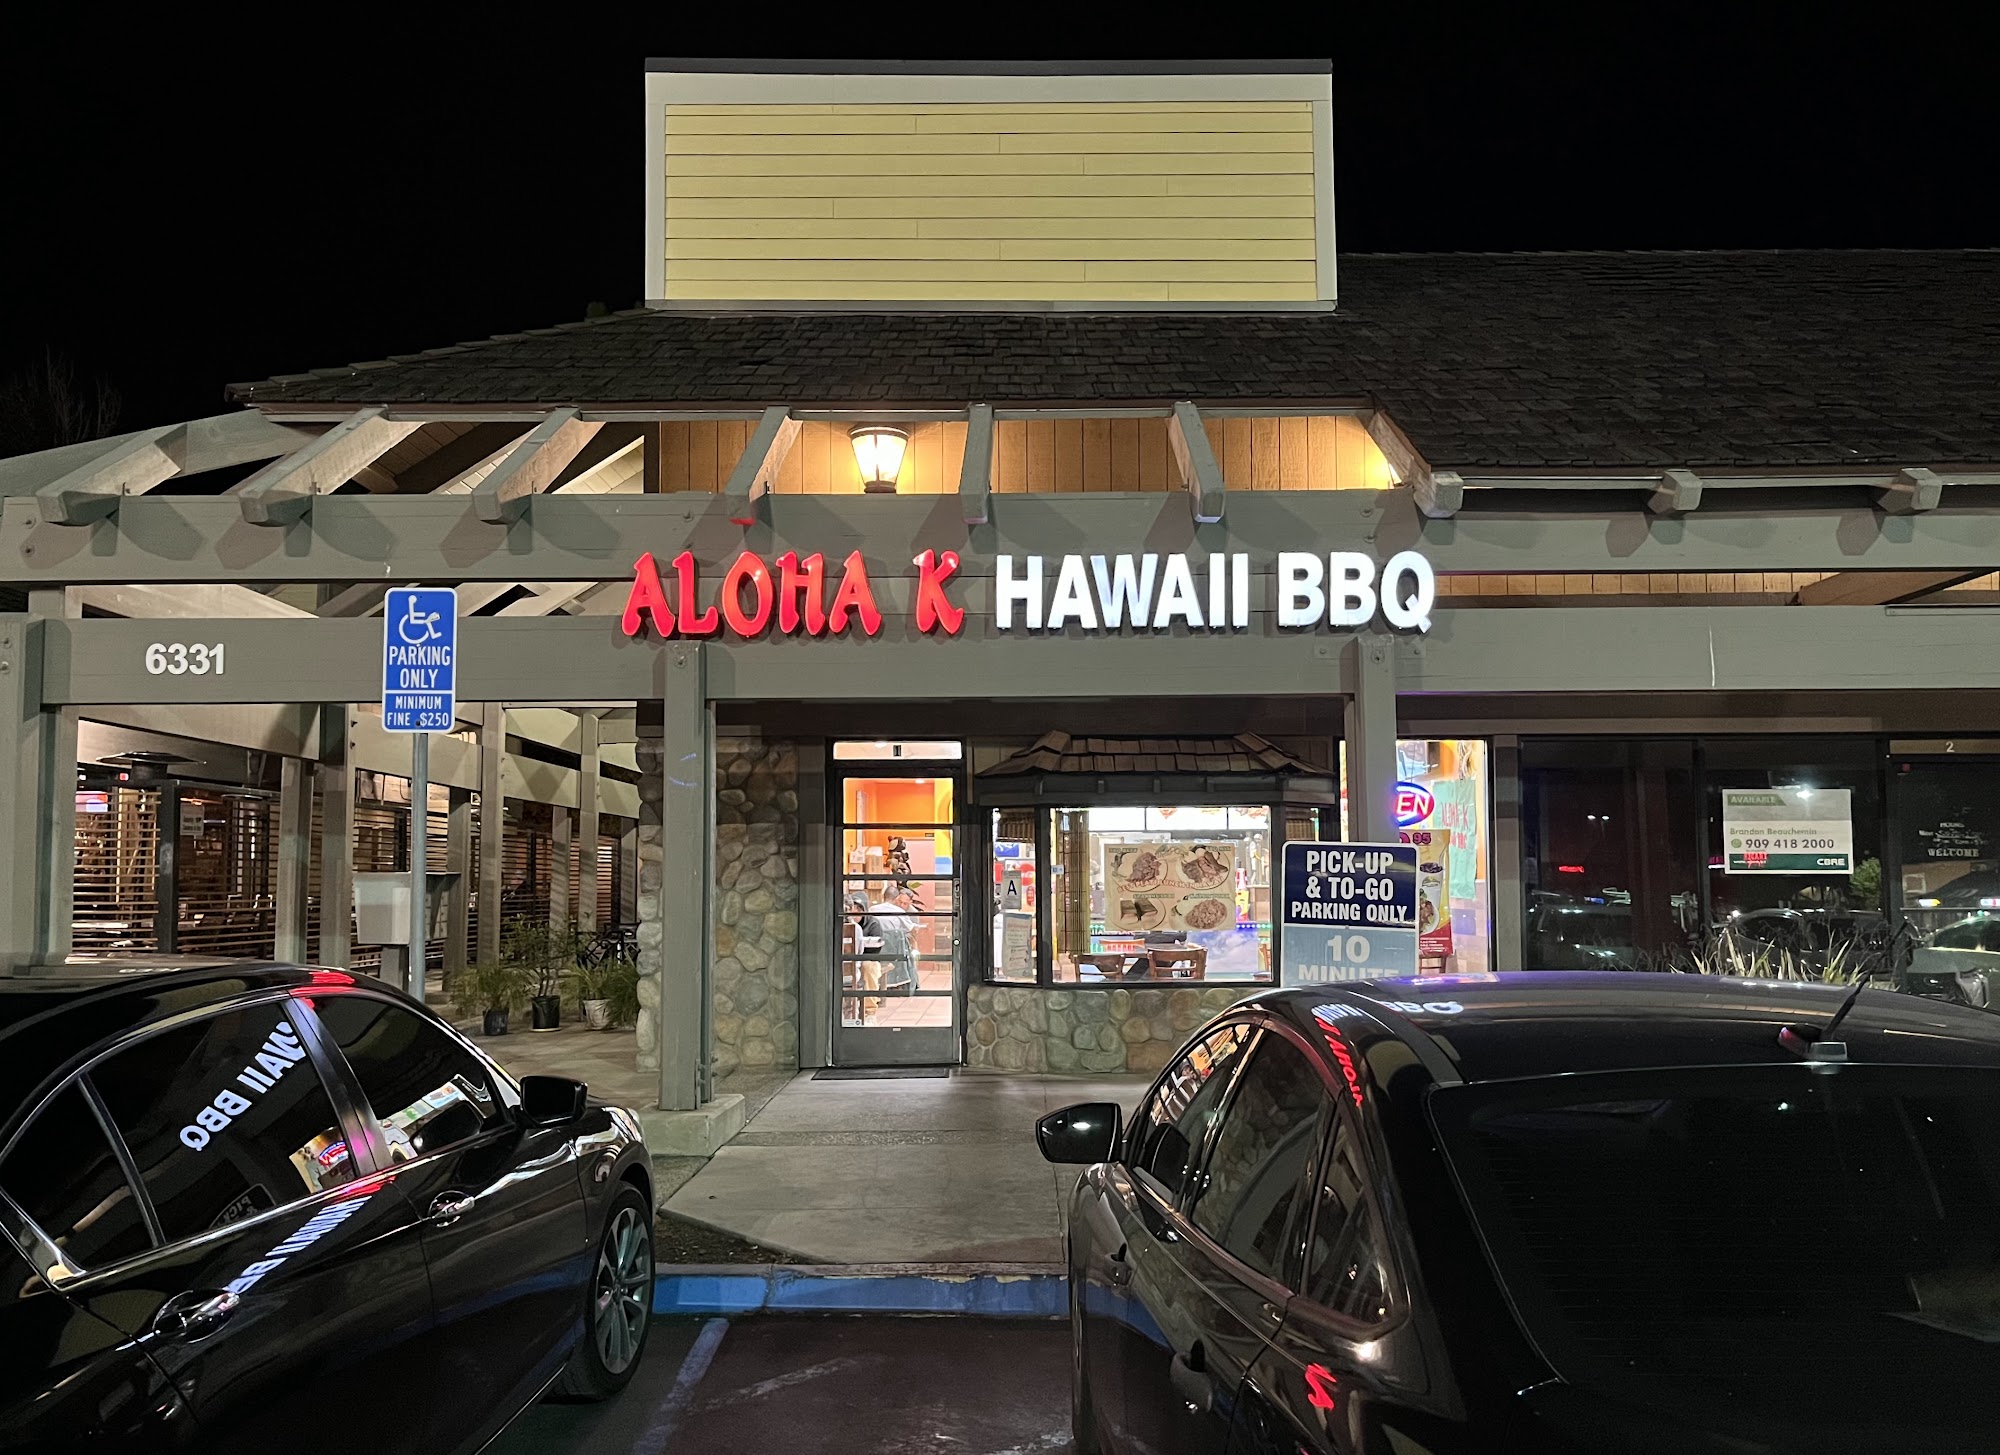 Aloha K Hawaii BBQ